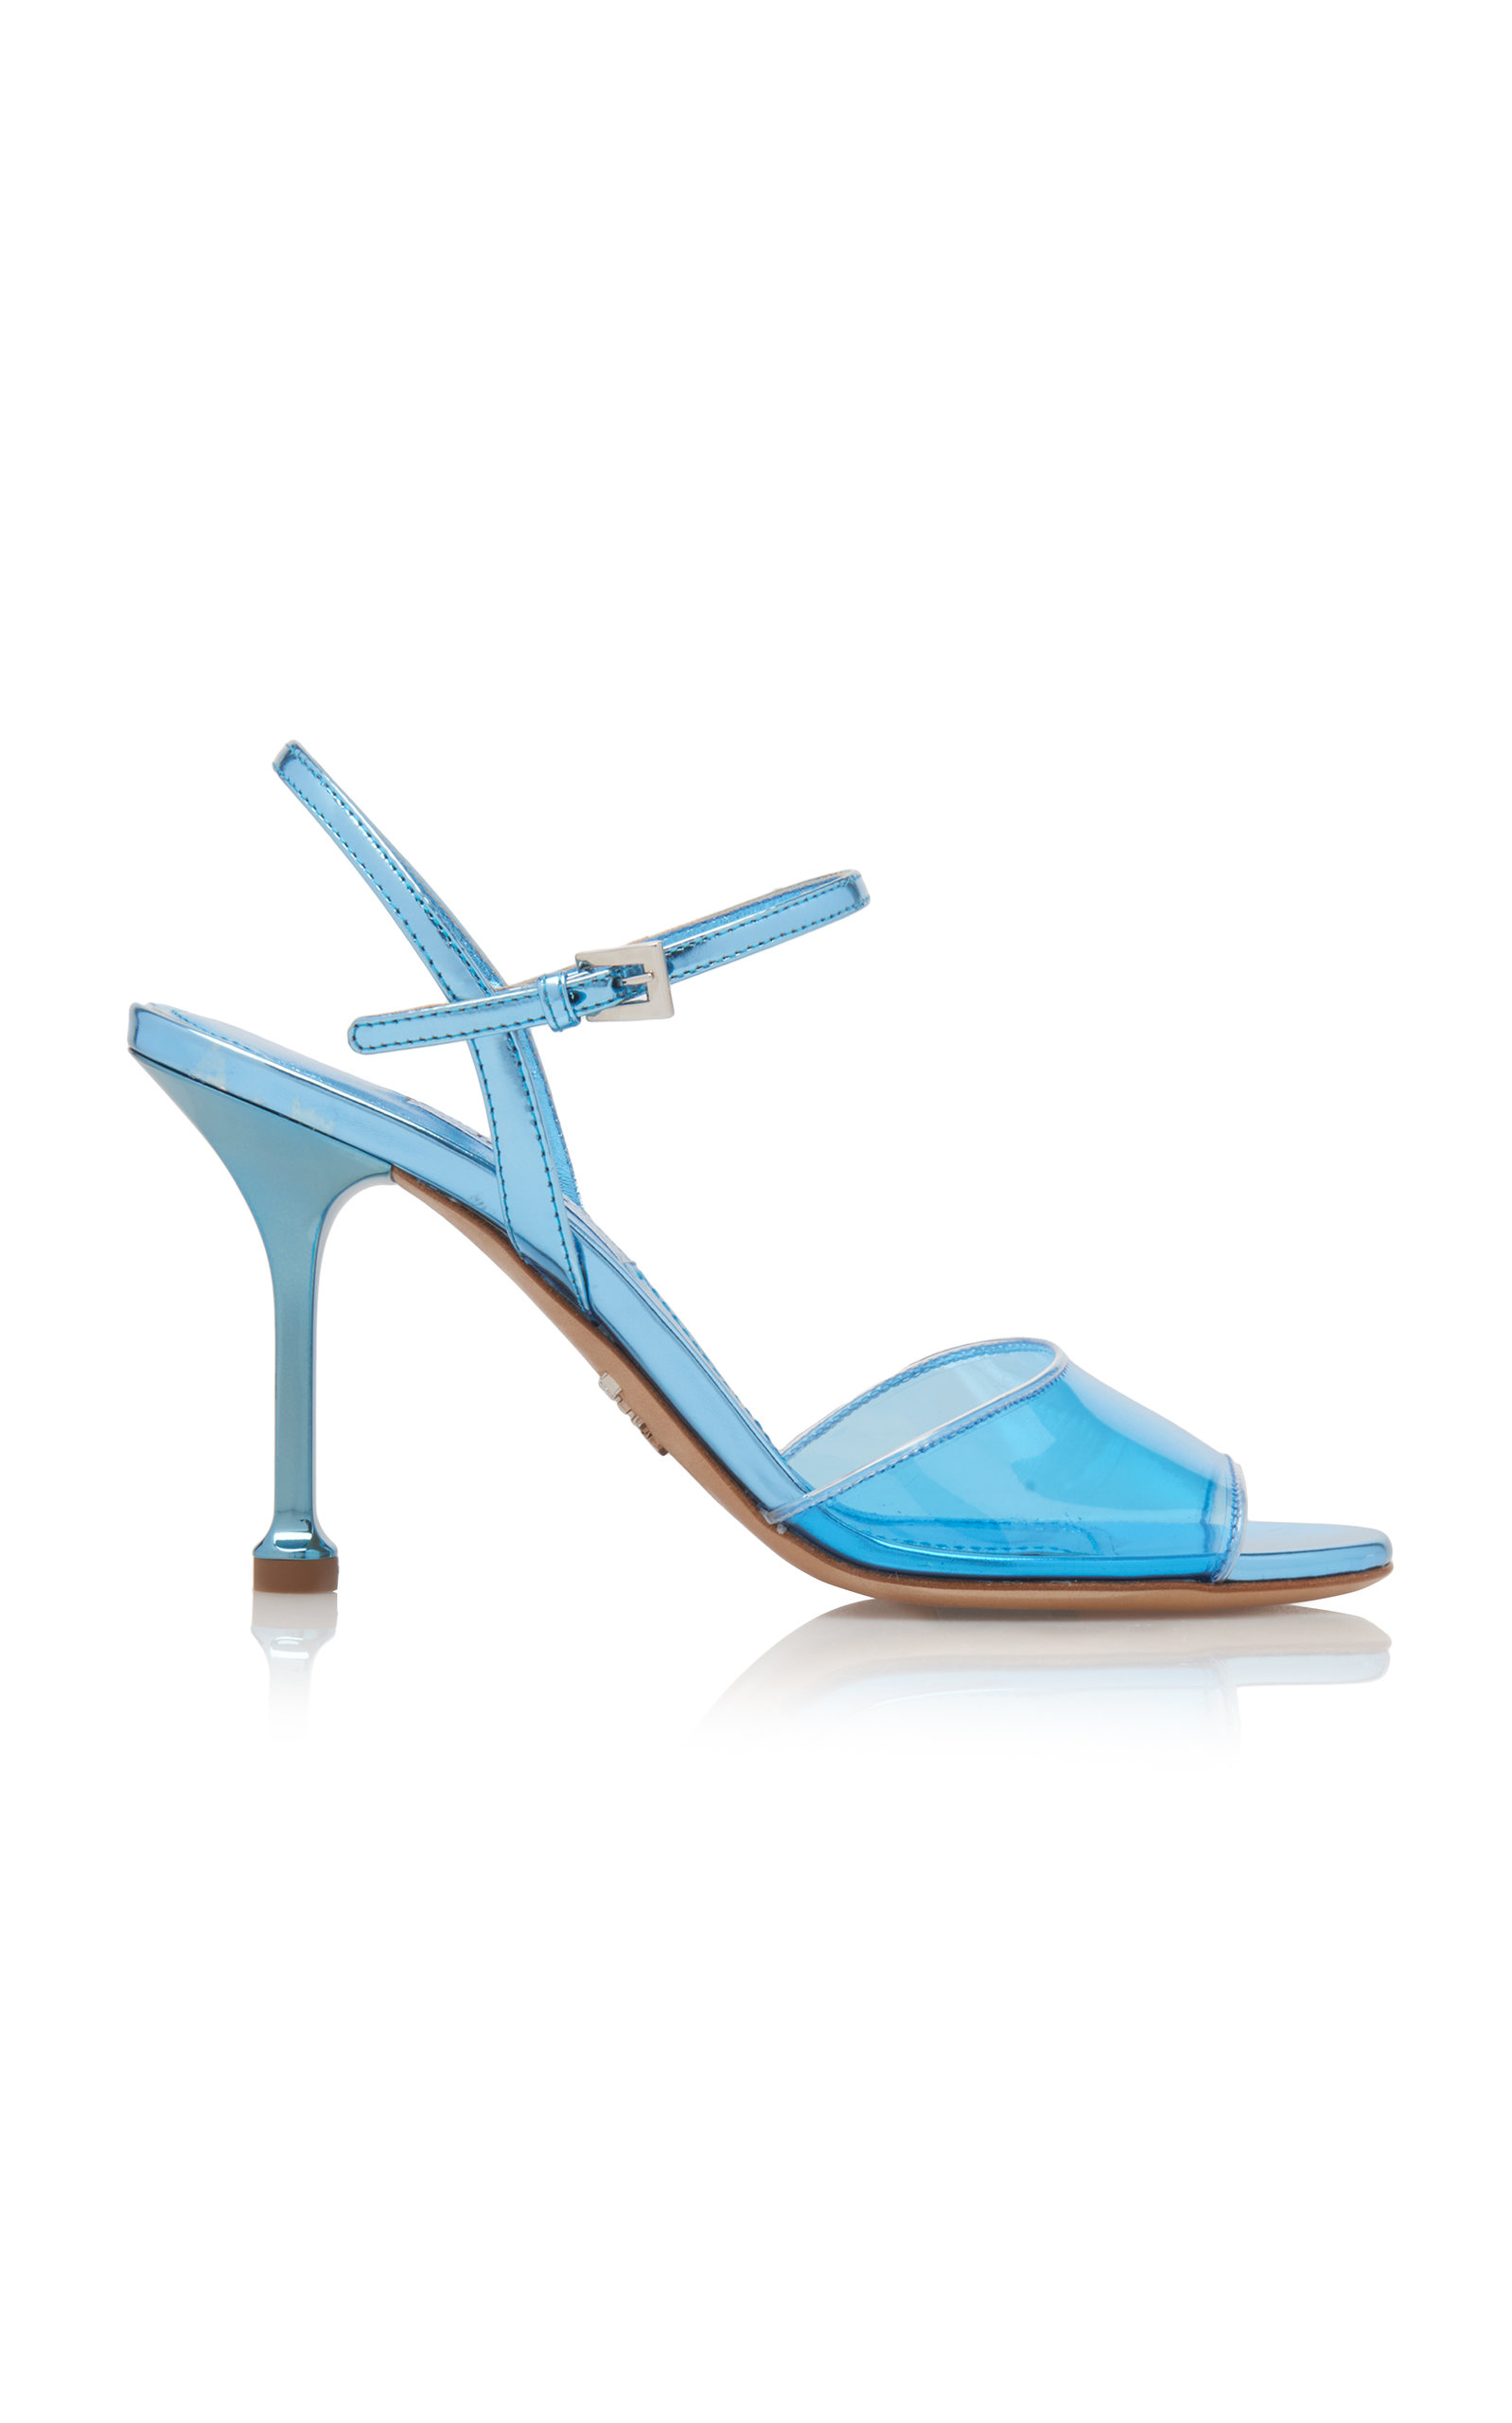 Prada - Translucent Sandals  - Blue - IT 36 - Moda Operandi